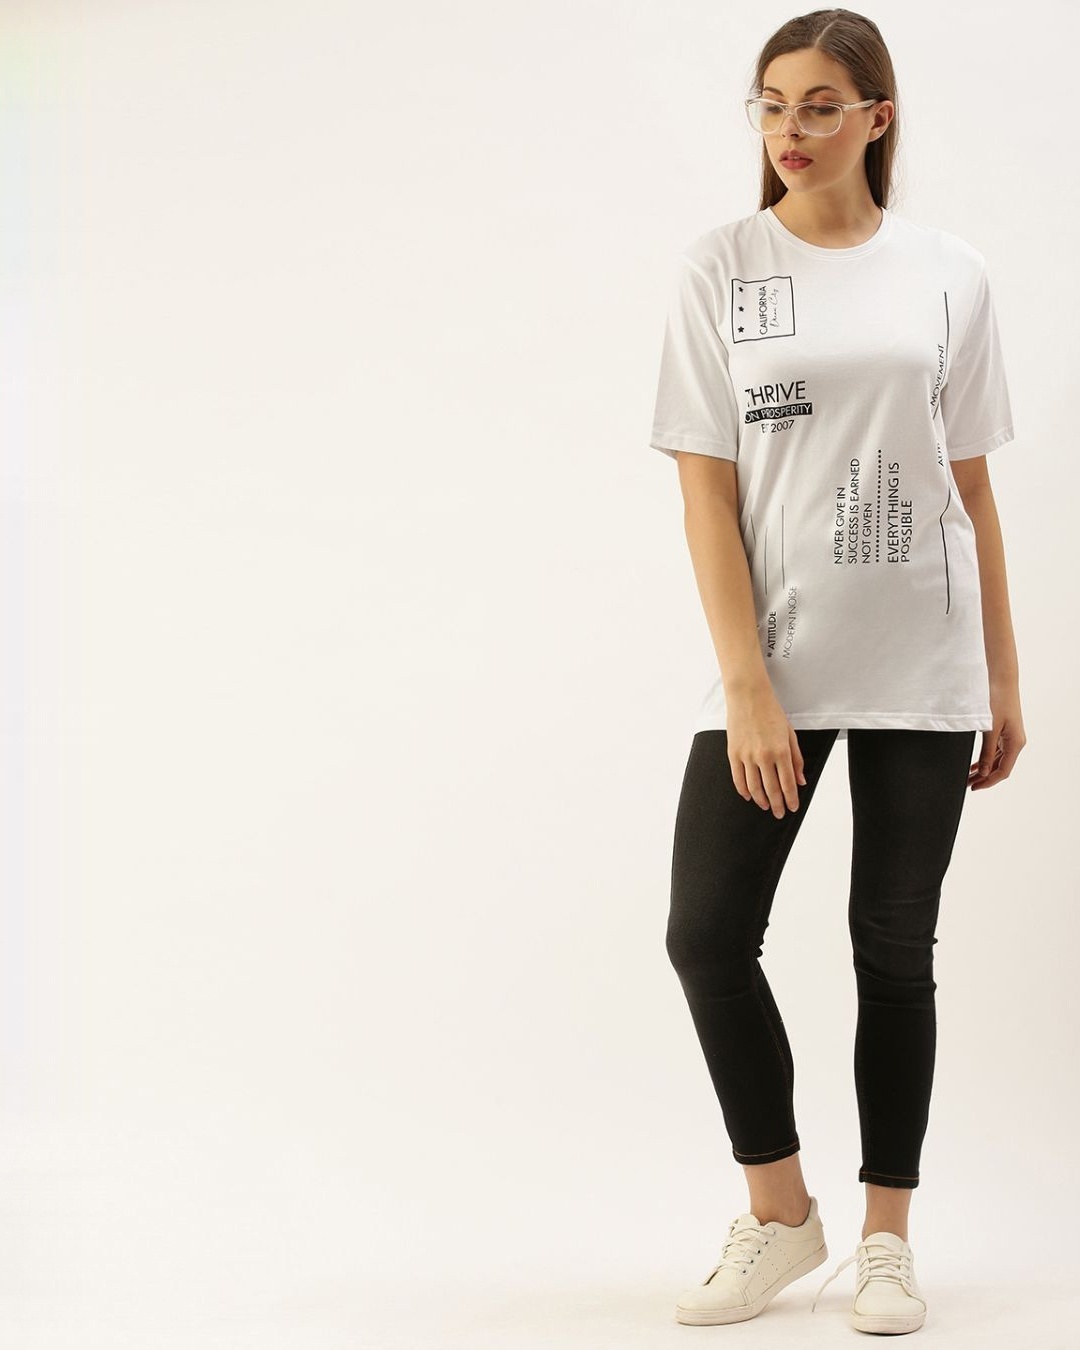 Shop Women's White Typography T-shirt